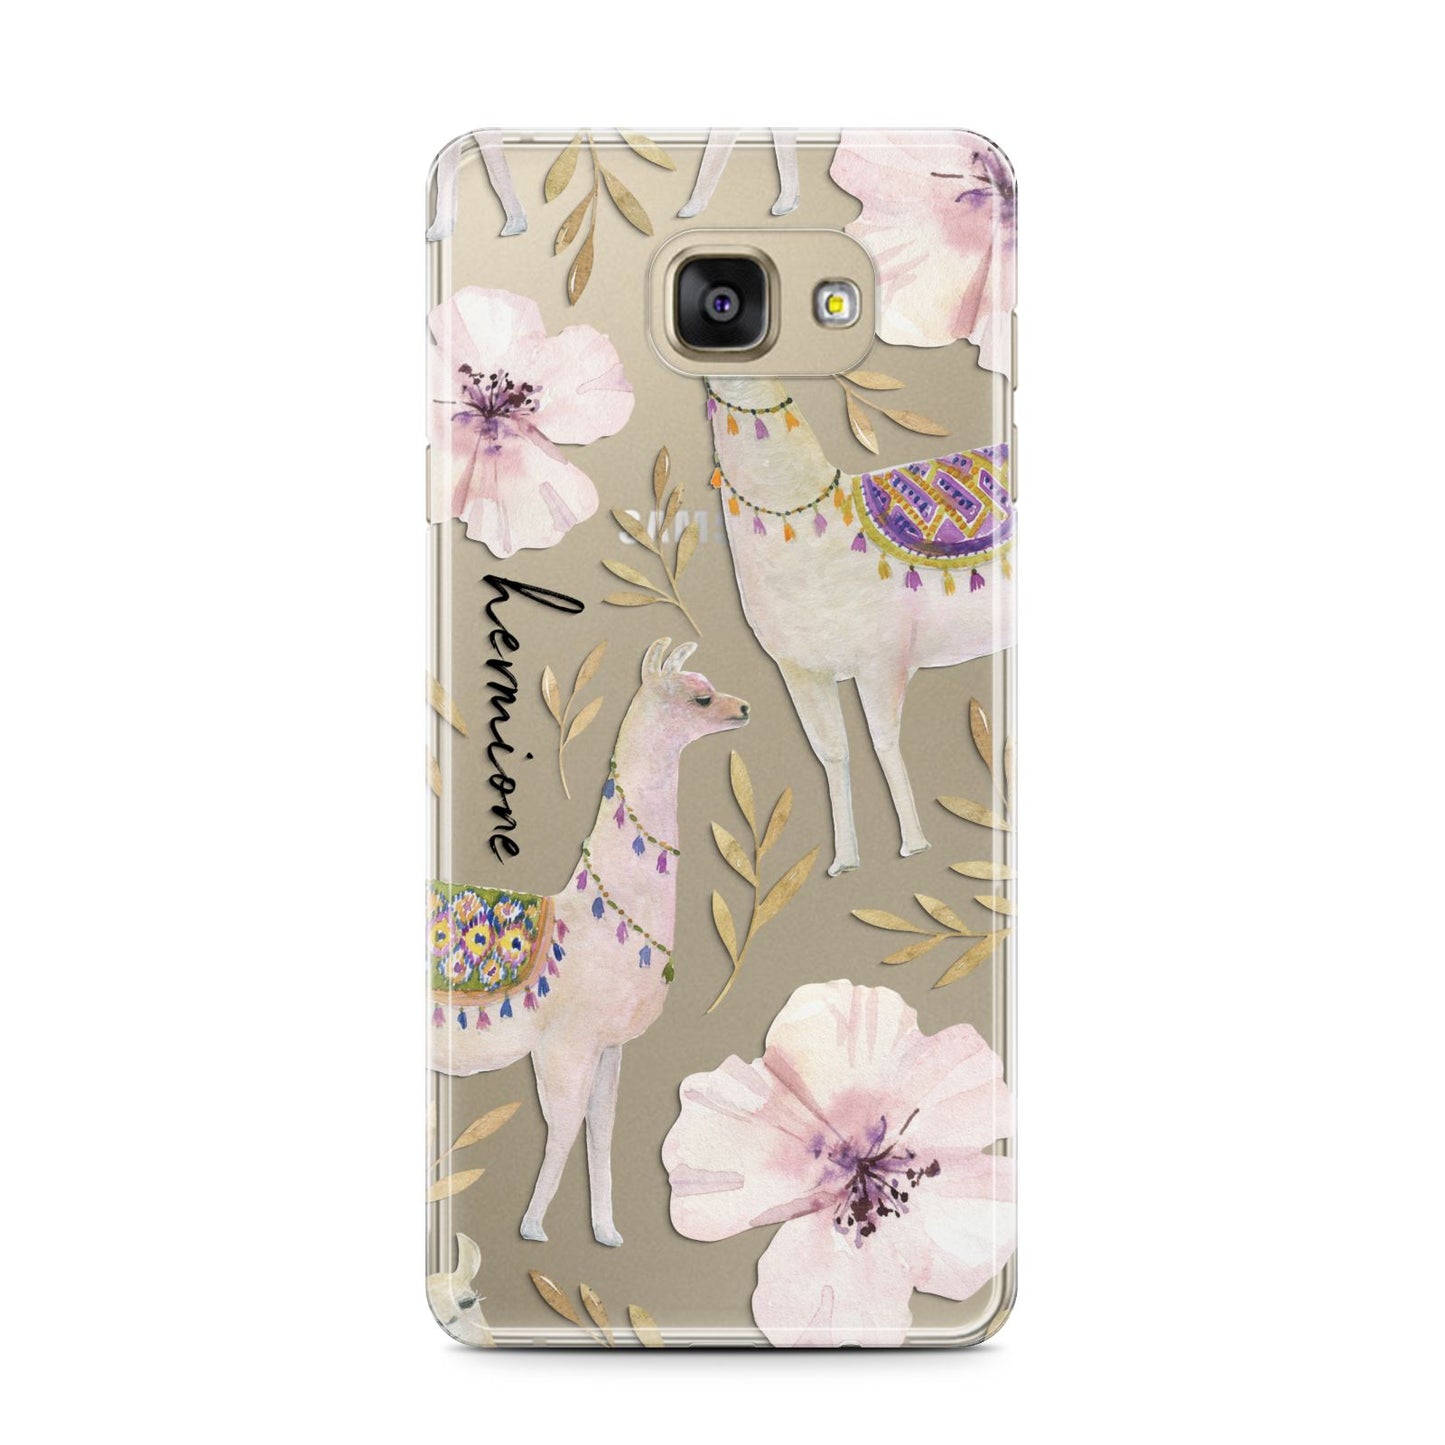 Personalised Llamas Samsung Galaxy A7 2016 Case on gold phone